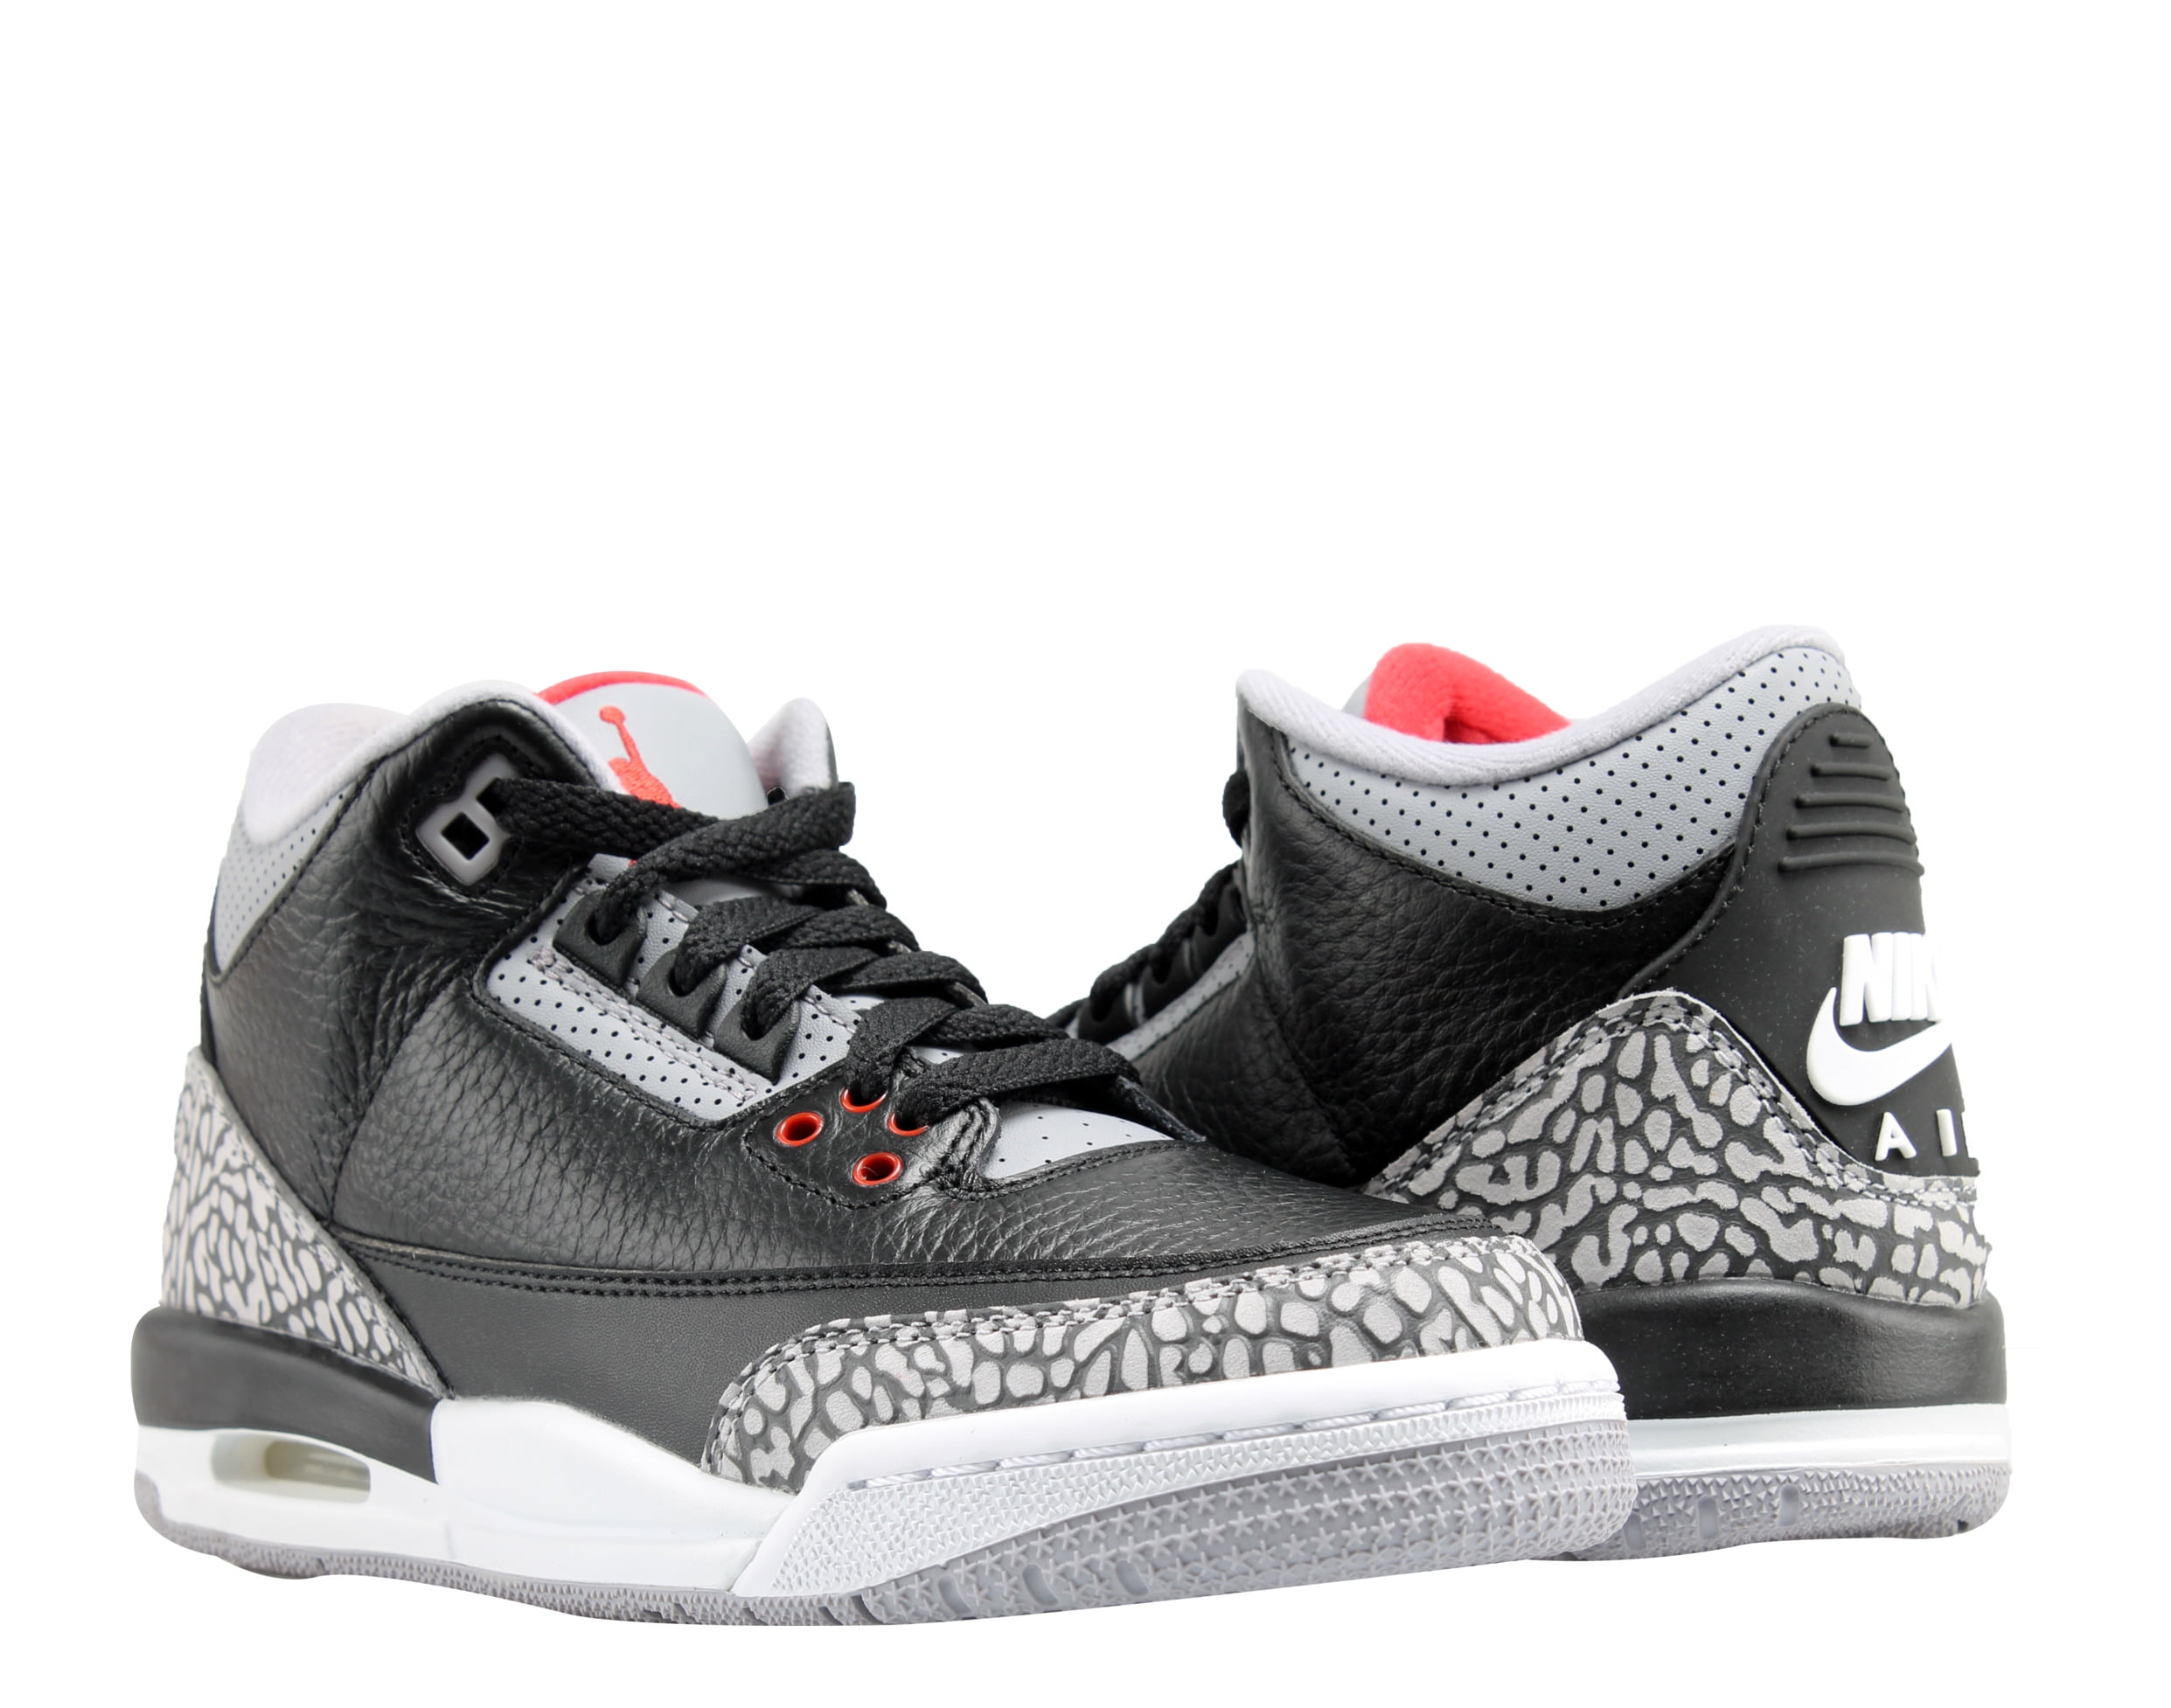 Nike Air Jordan 3 Retro OG BG Big Kids Basketball Shoes Size 4